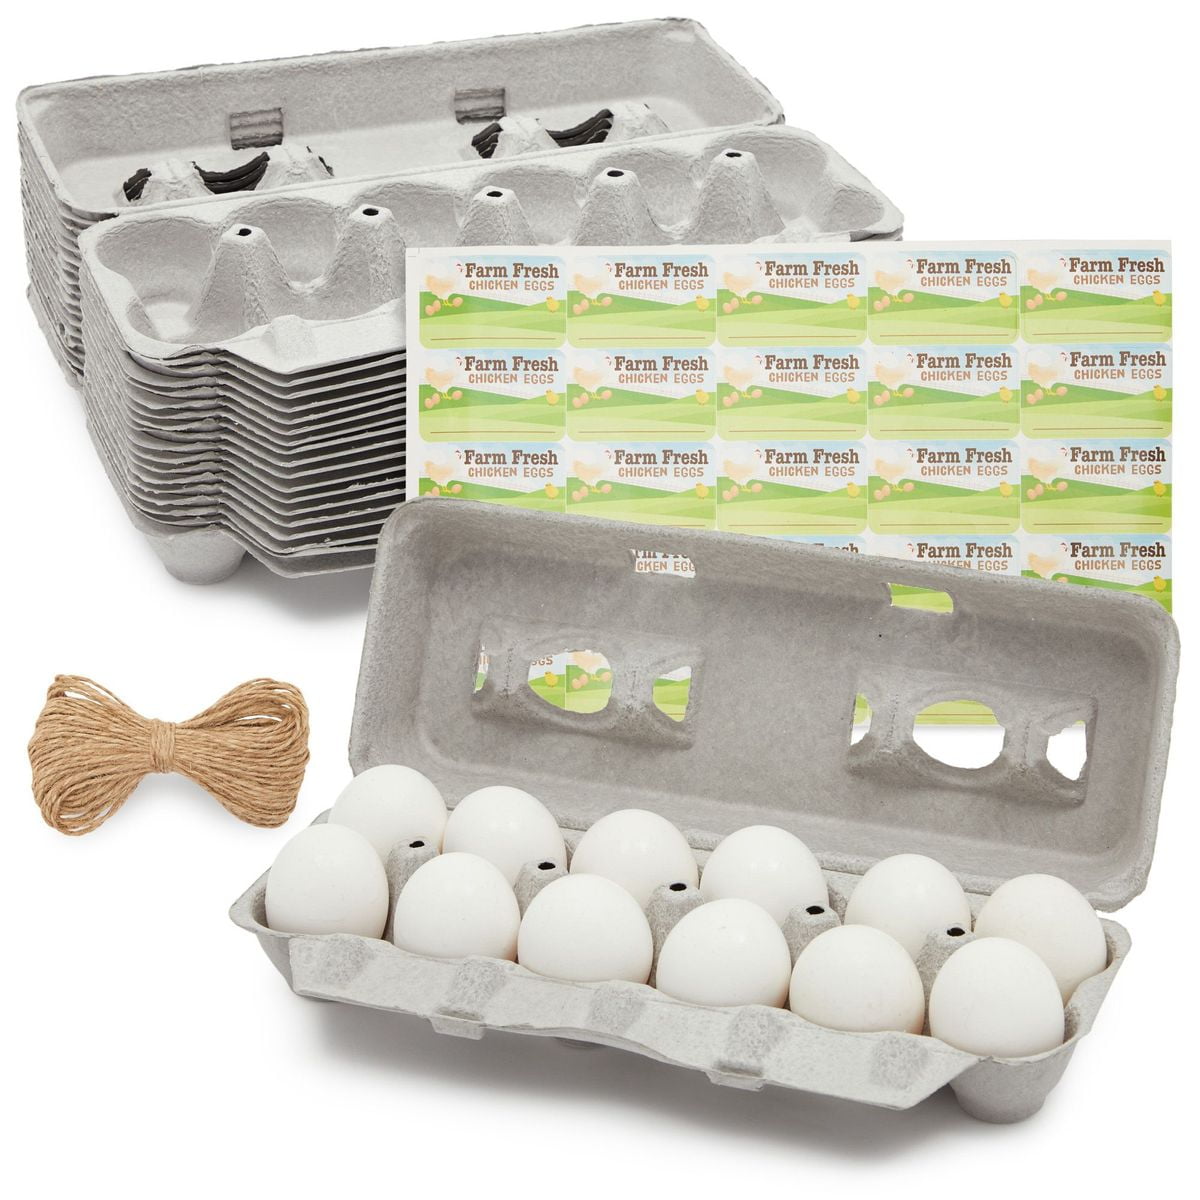 40 Pack Plastic Egg Cartons Cheap Bulk,1 Dozen Clear Empty Egg Cartons for  Chicken Eggs 2x6 Grids,Reusable Egg Carton for Family, Chicken Farm